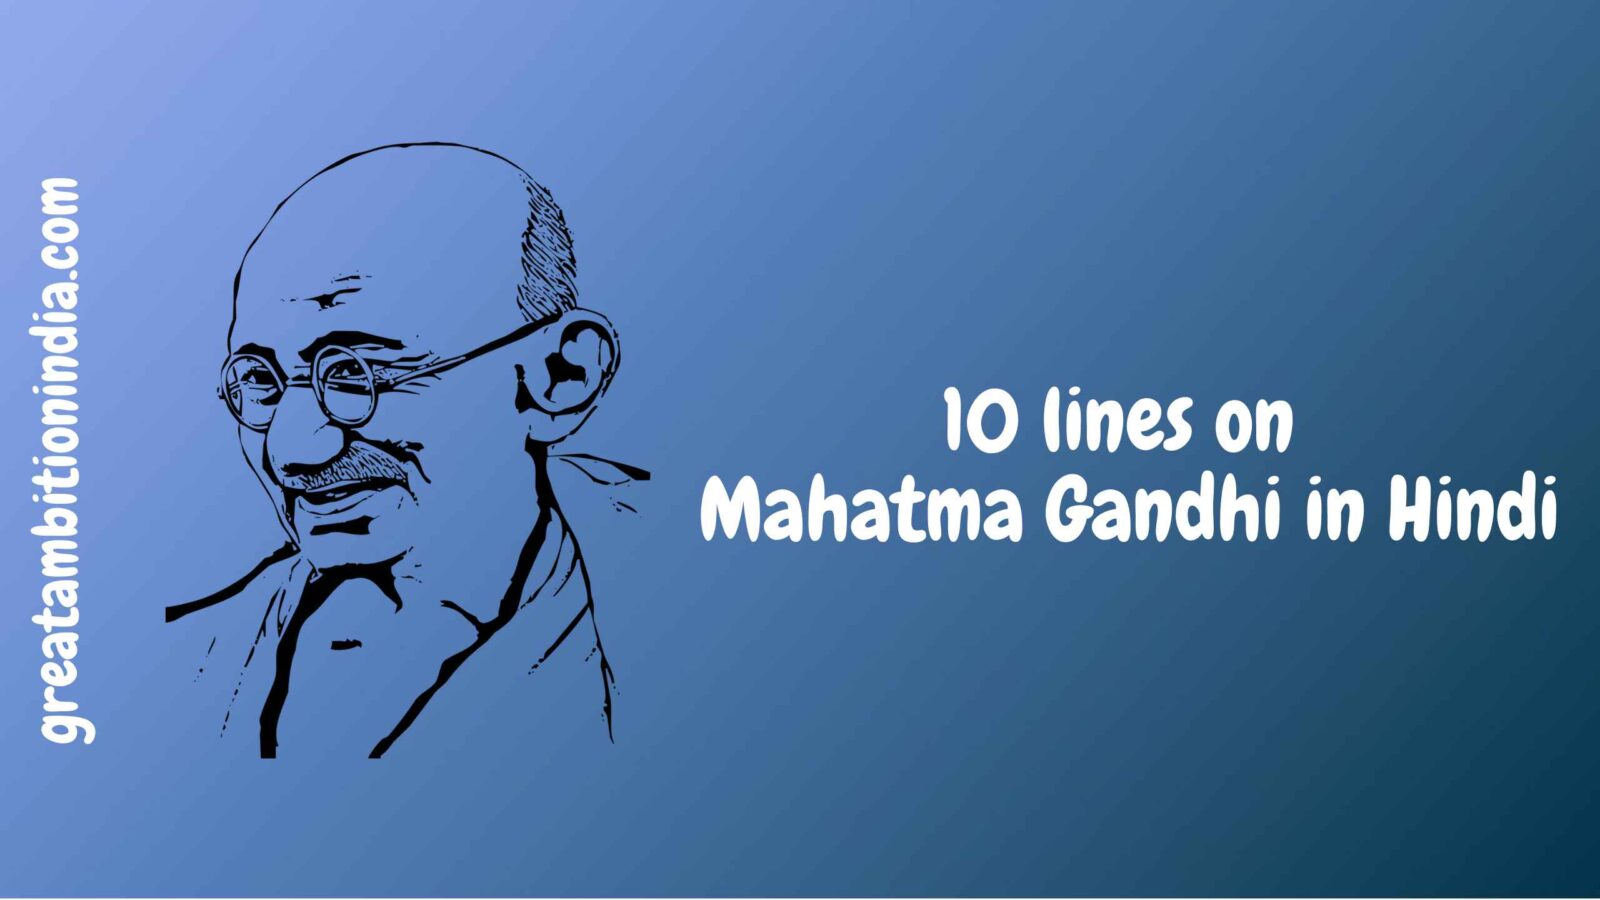 10 lines on Mahatma Gandhi in Hindi/Mahatma Gandhi 10 lines in Hindi Essay Writing